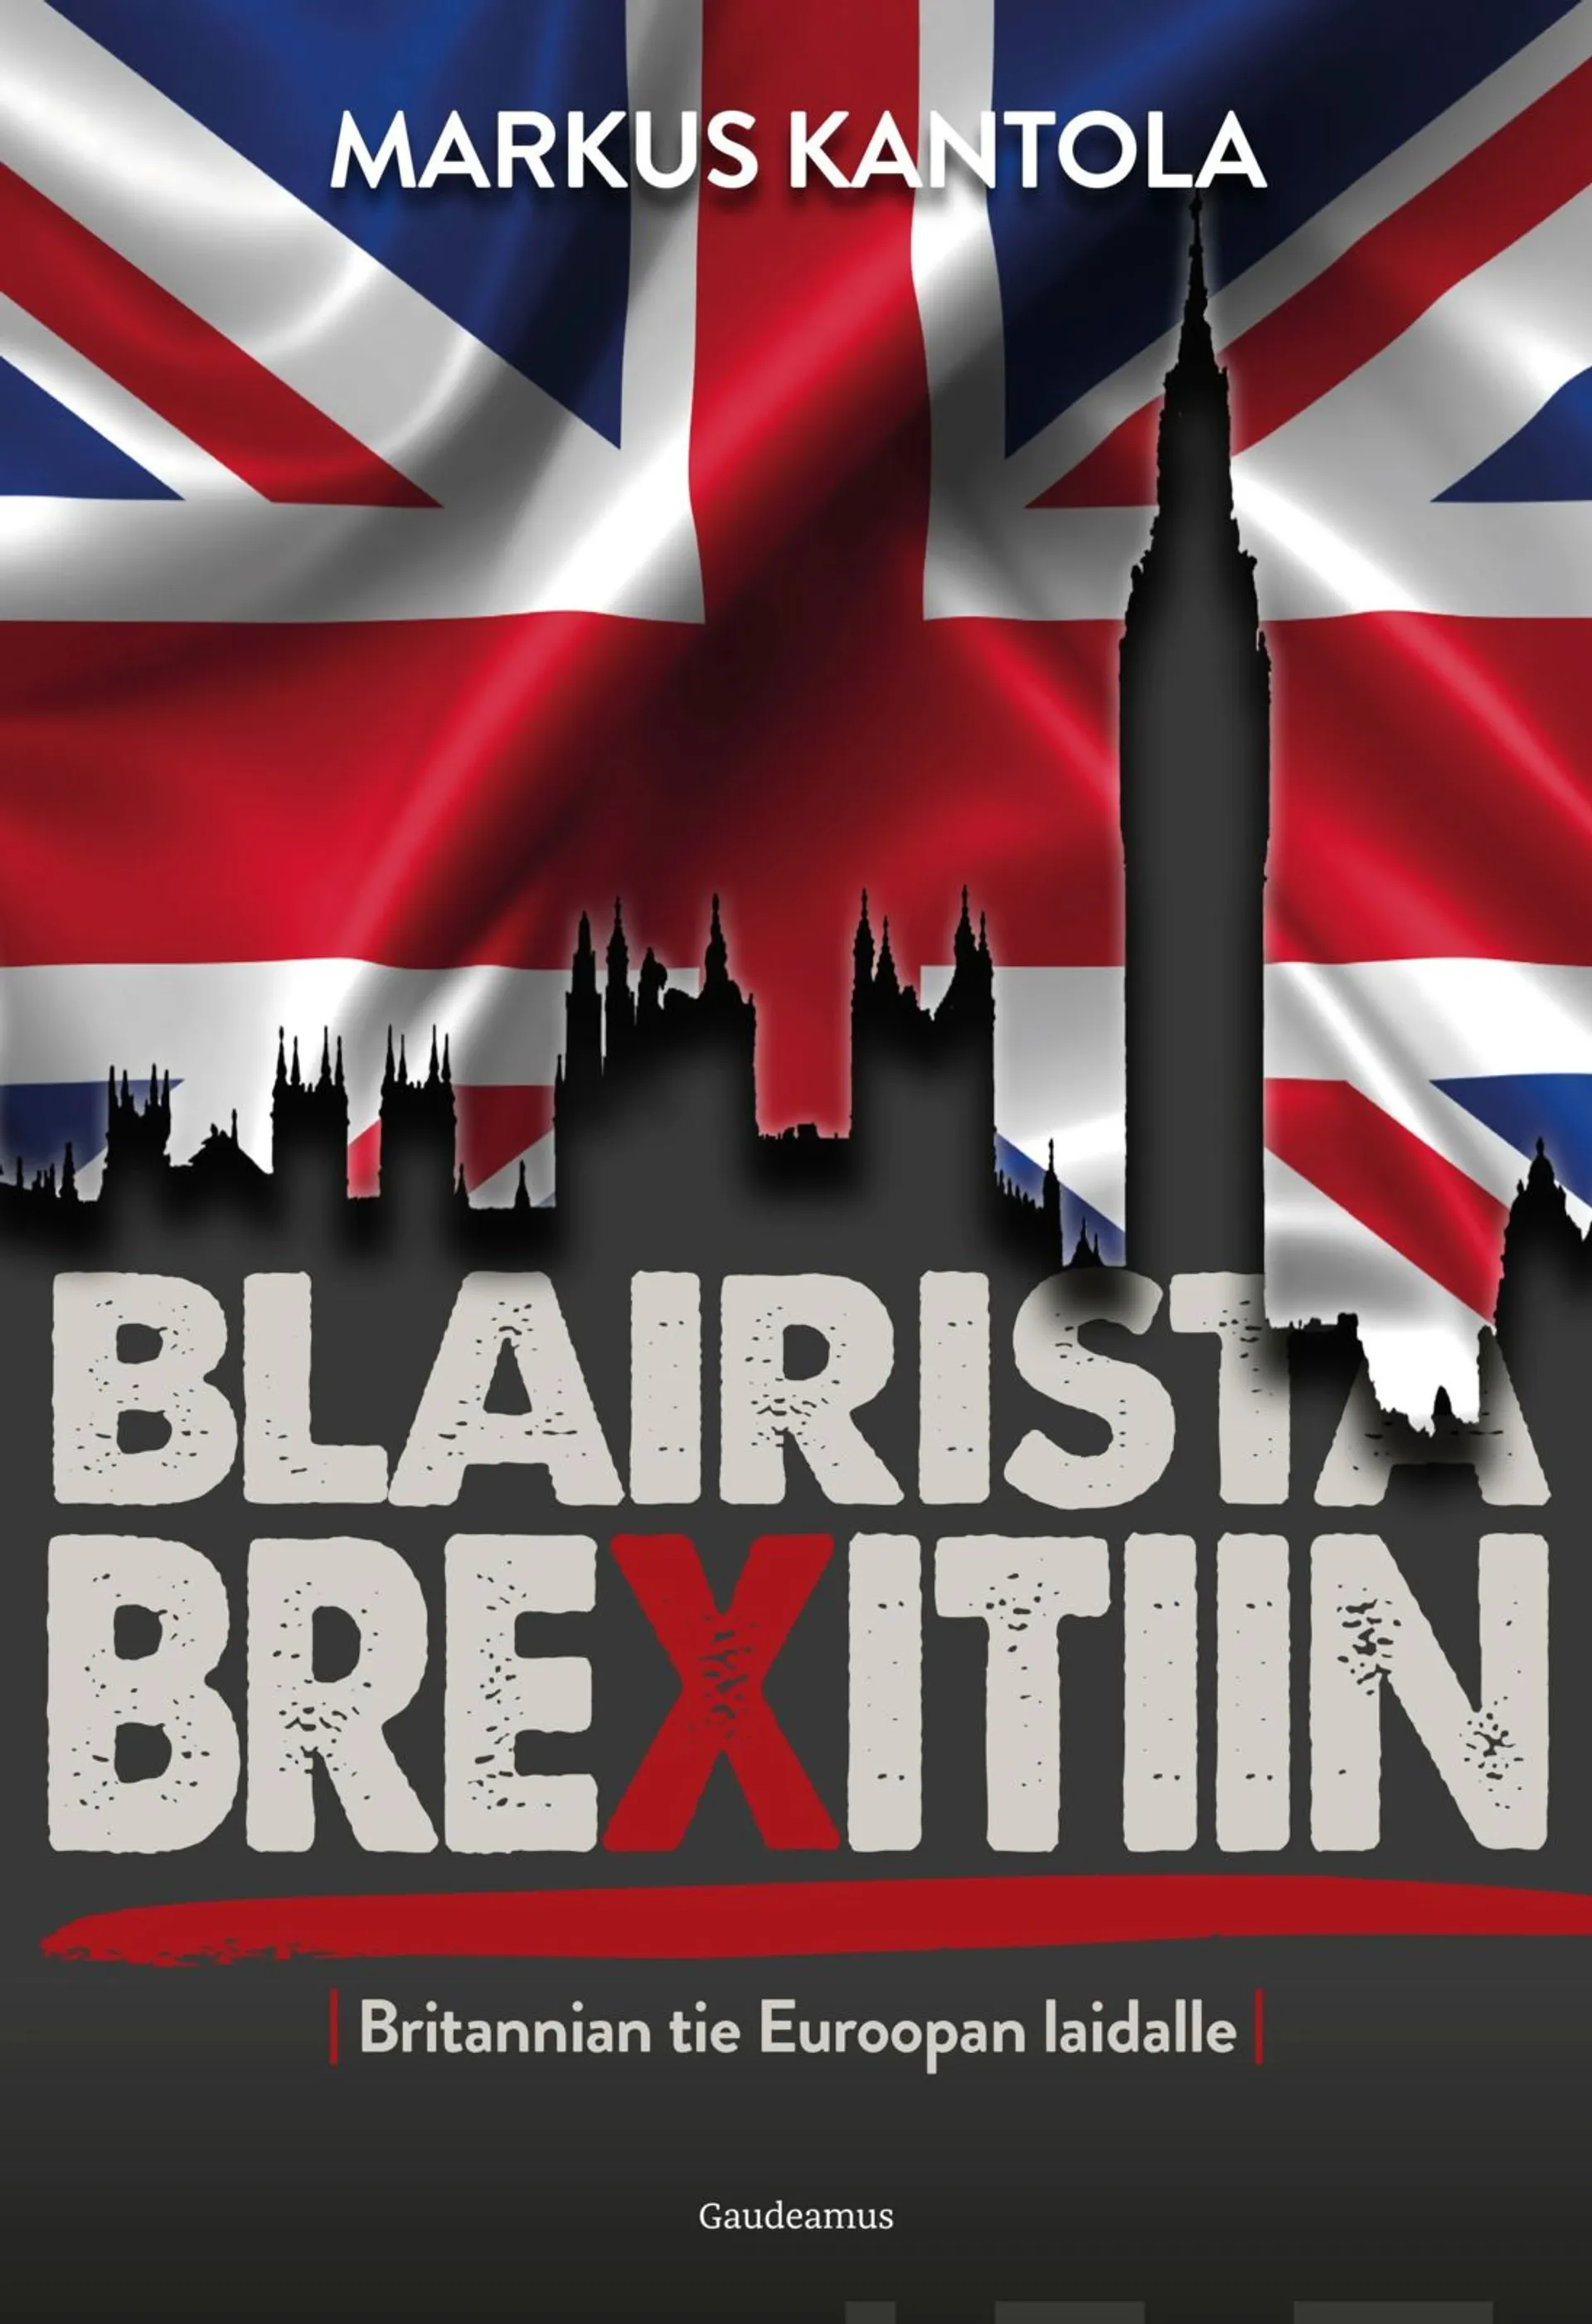 Kantola, Blairista Brexitiin